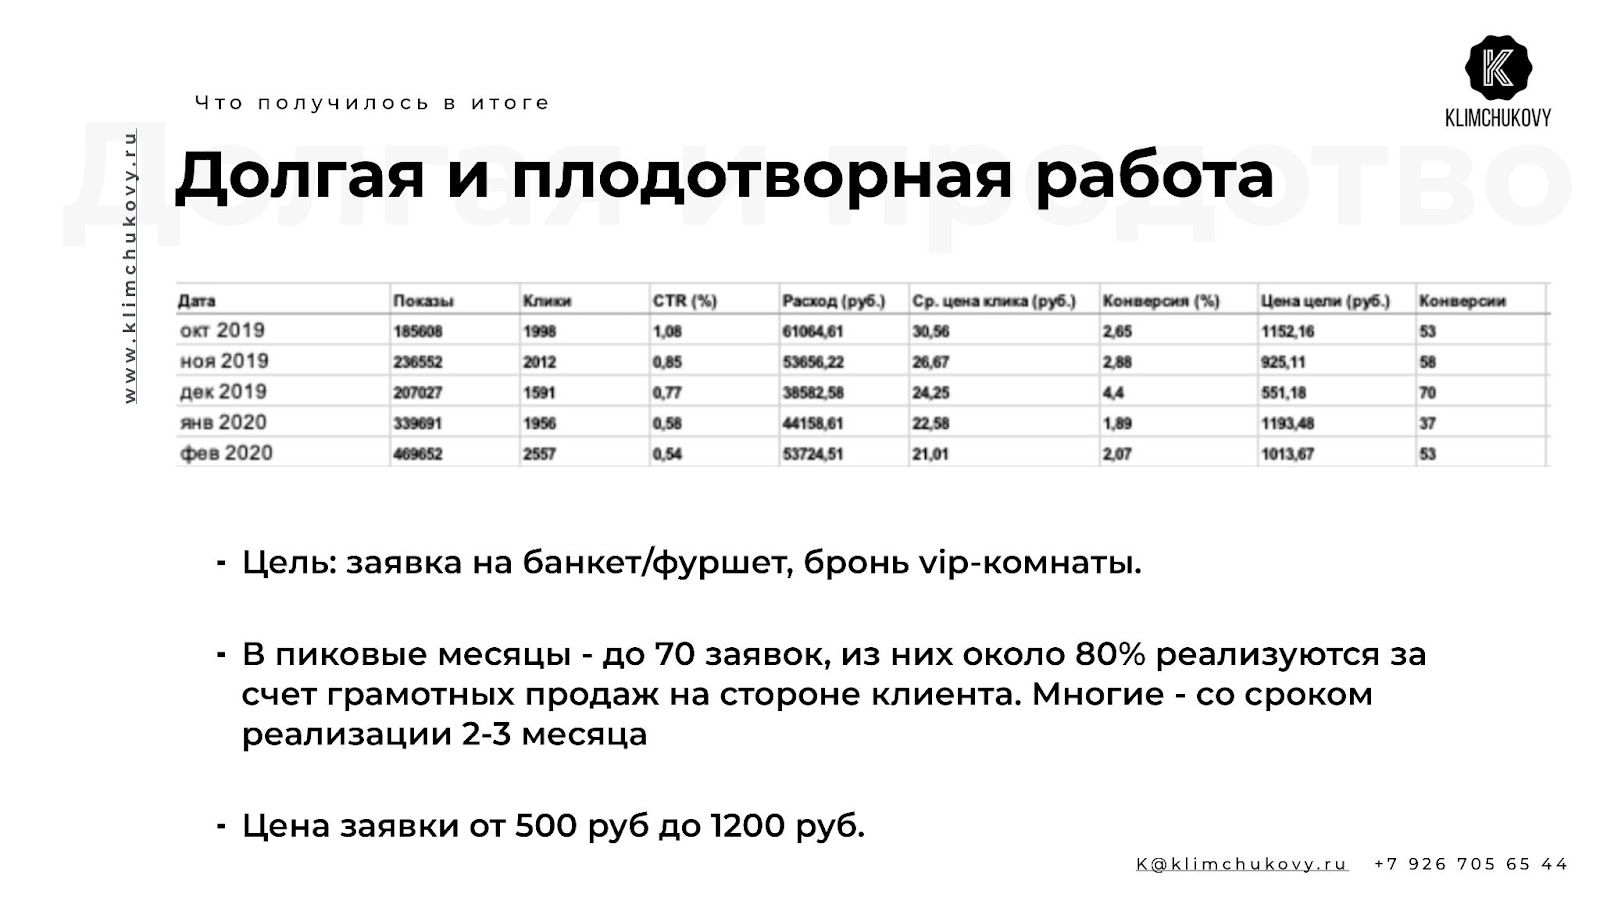 Цена заявки на банкет или фуршет составляет от 500 до 1200 рублей